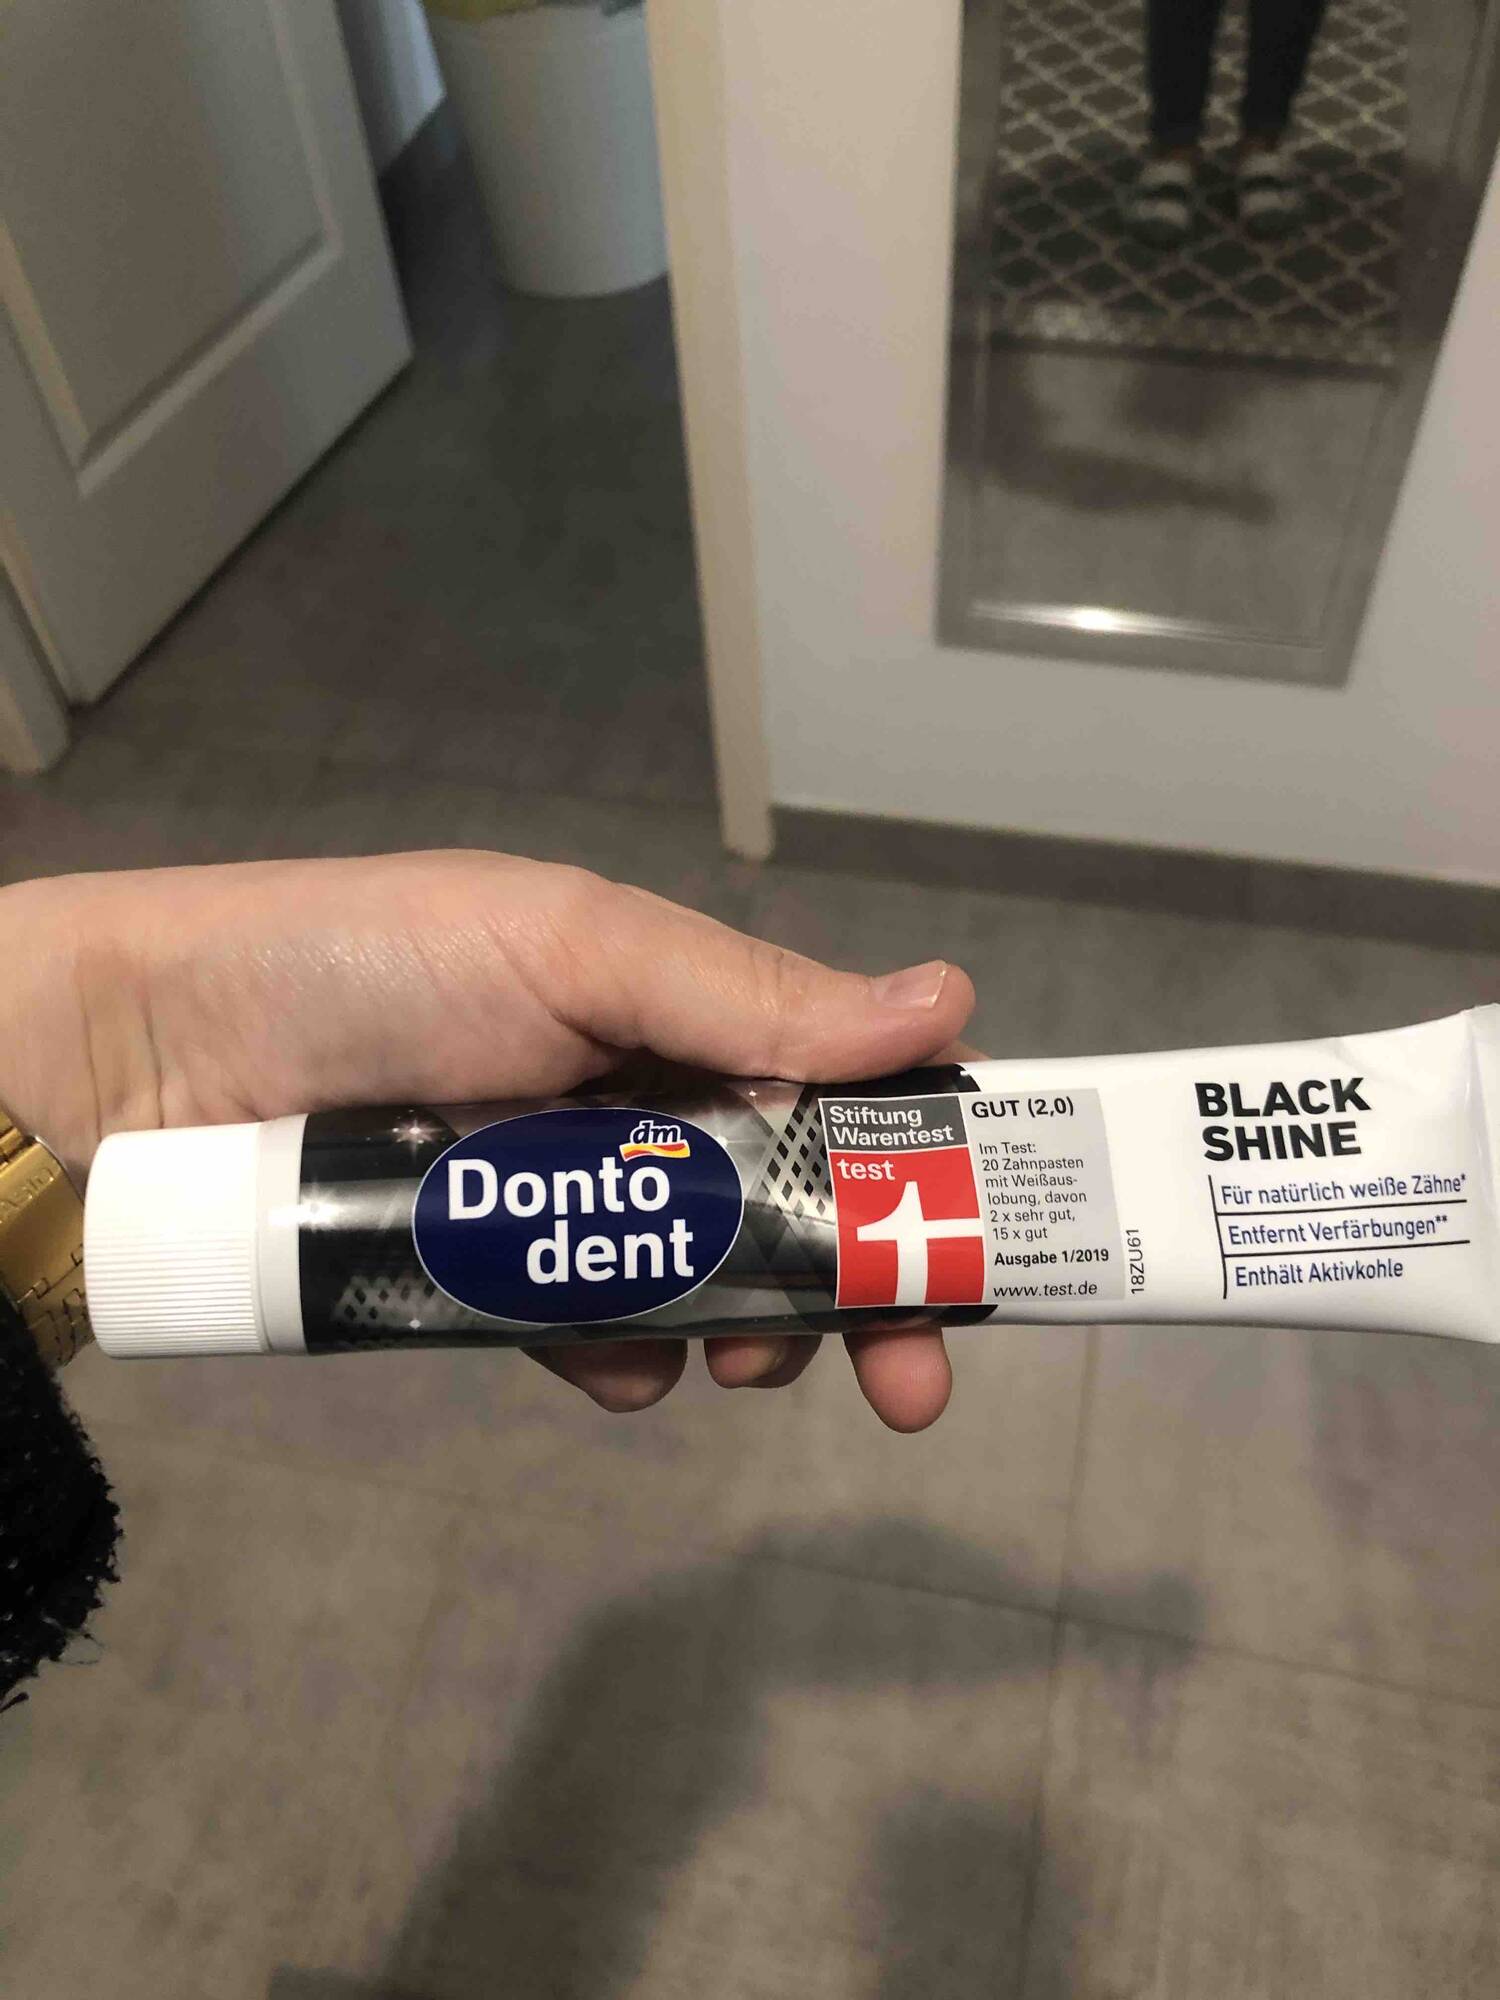 DM - Dontodent Black shine - Dentifrice